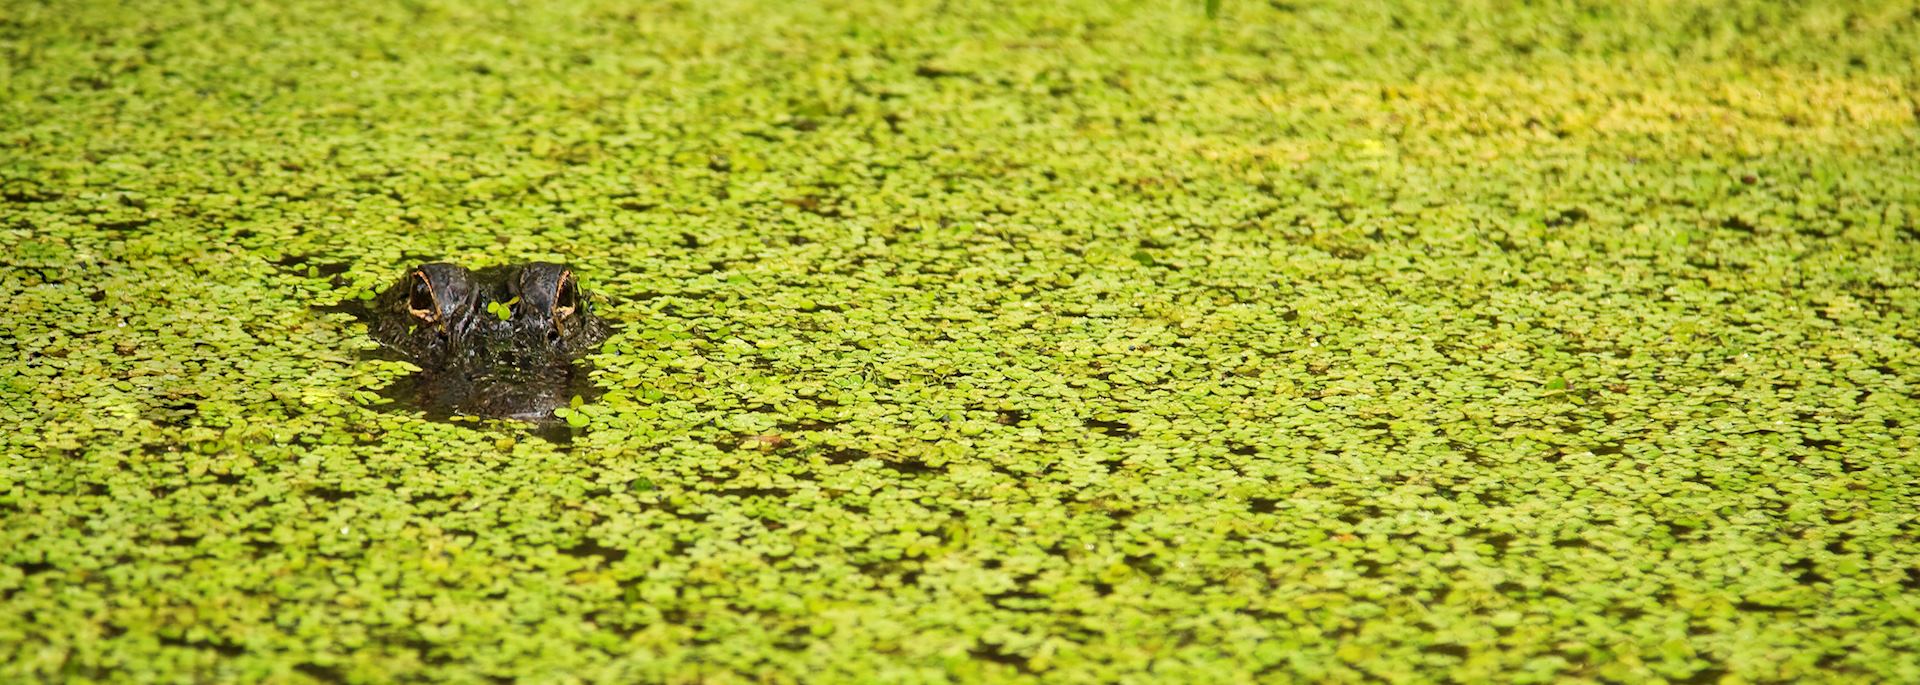 Alligator, Louisiana swamp